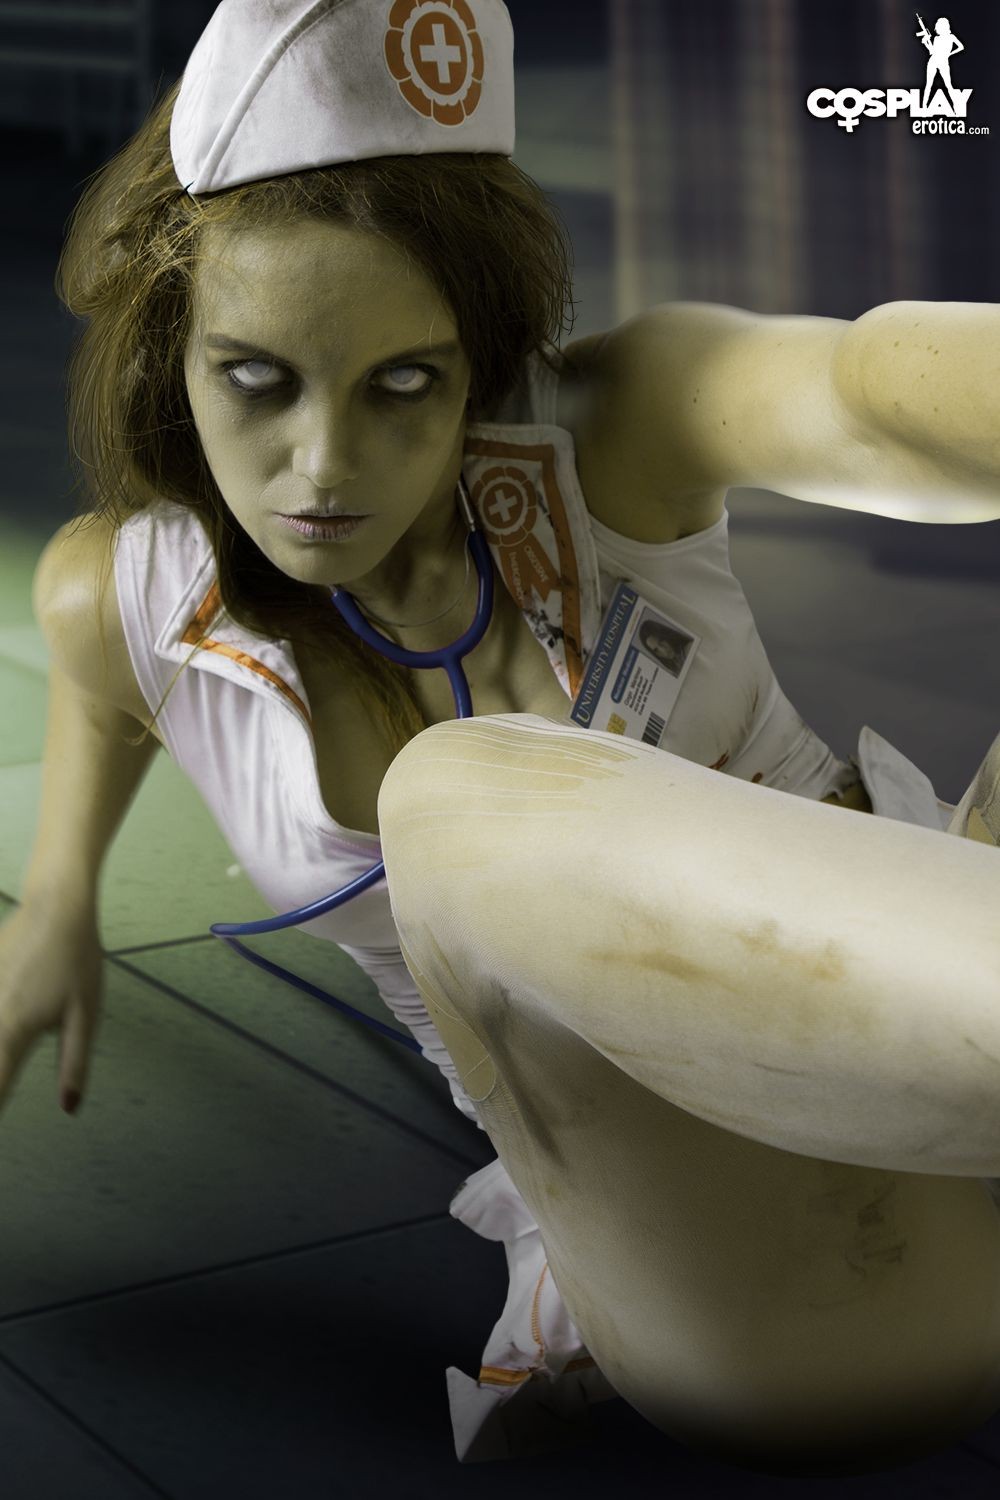 Cosplay featuring Walking Dead zombie in nurse uniform naked #73223825